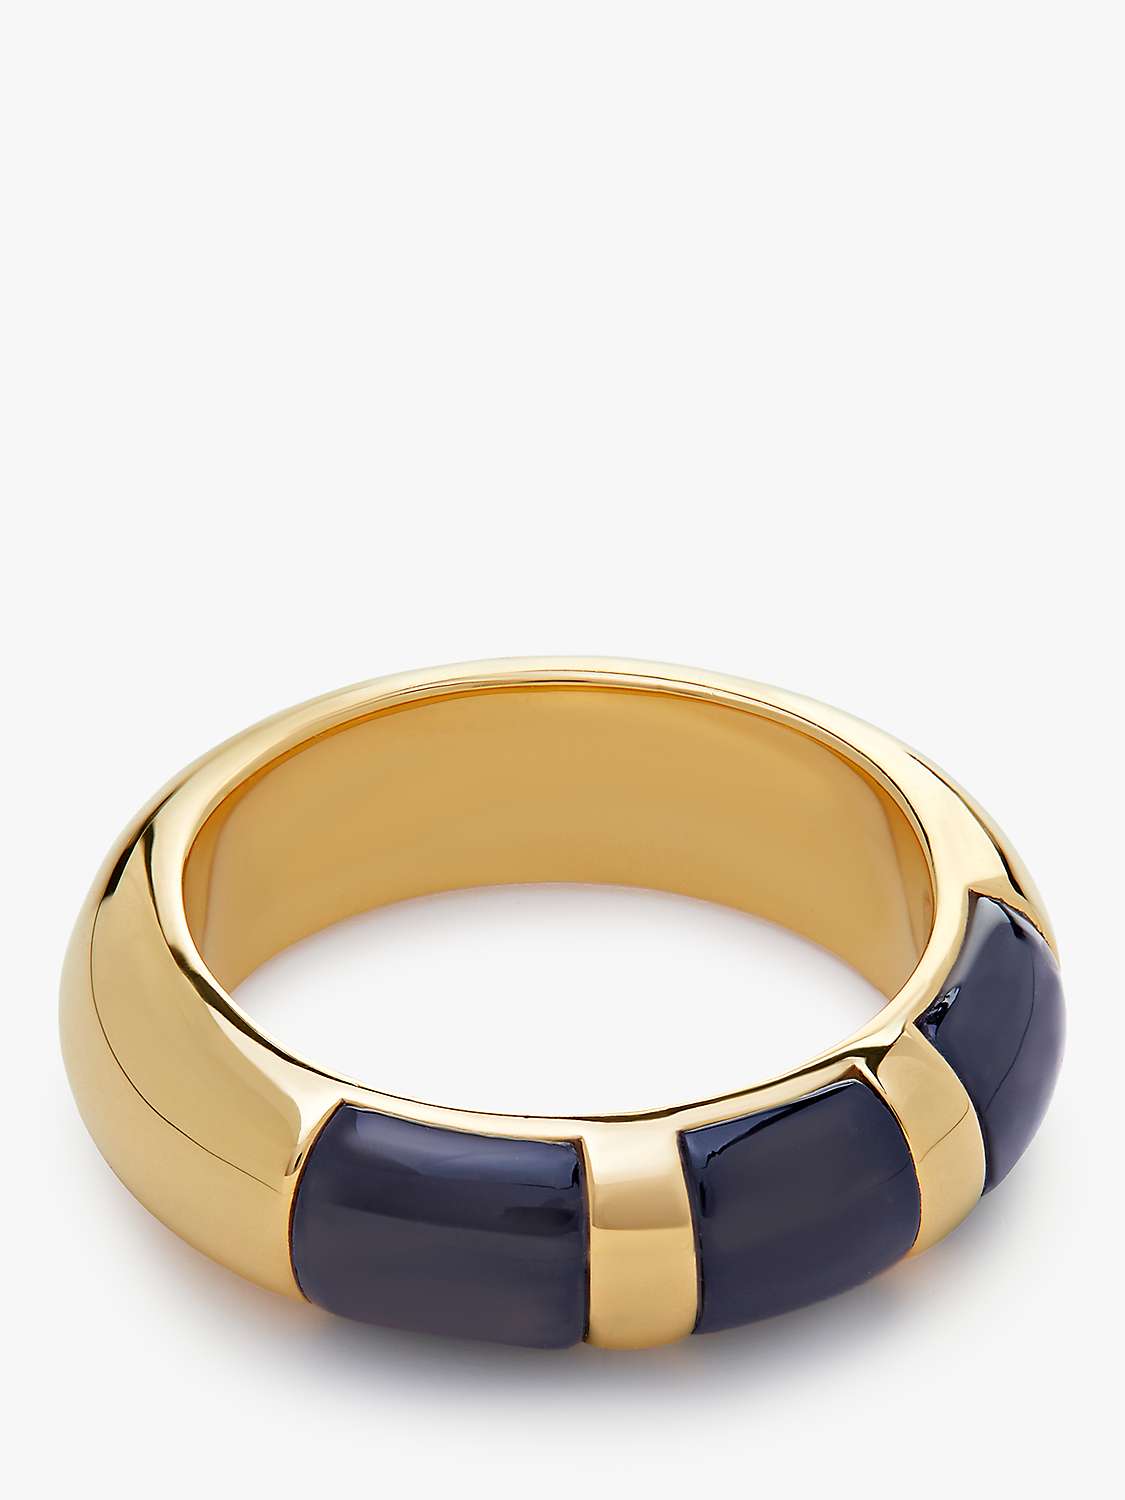 Buy Monica Vinader Kate Young Black Onyx Ring, Gold Online at johnlewis.com